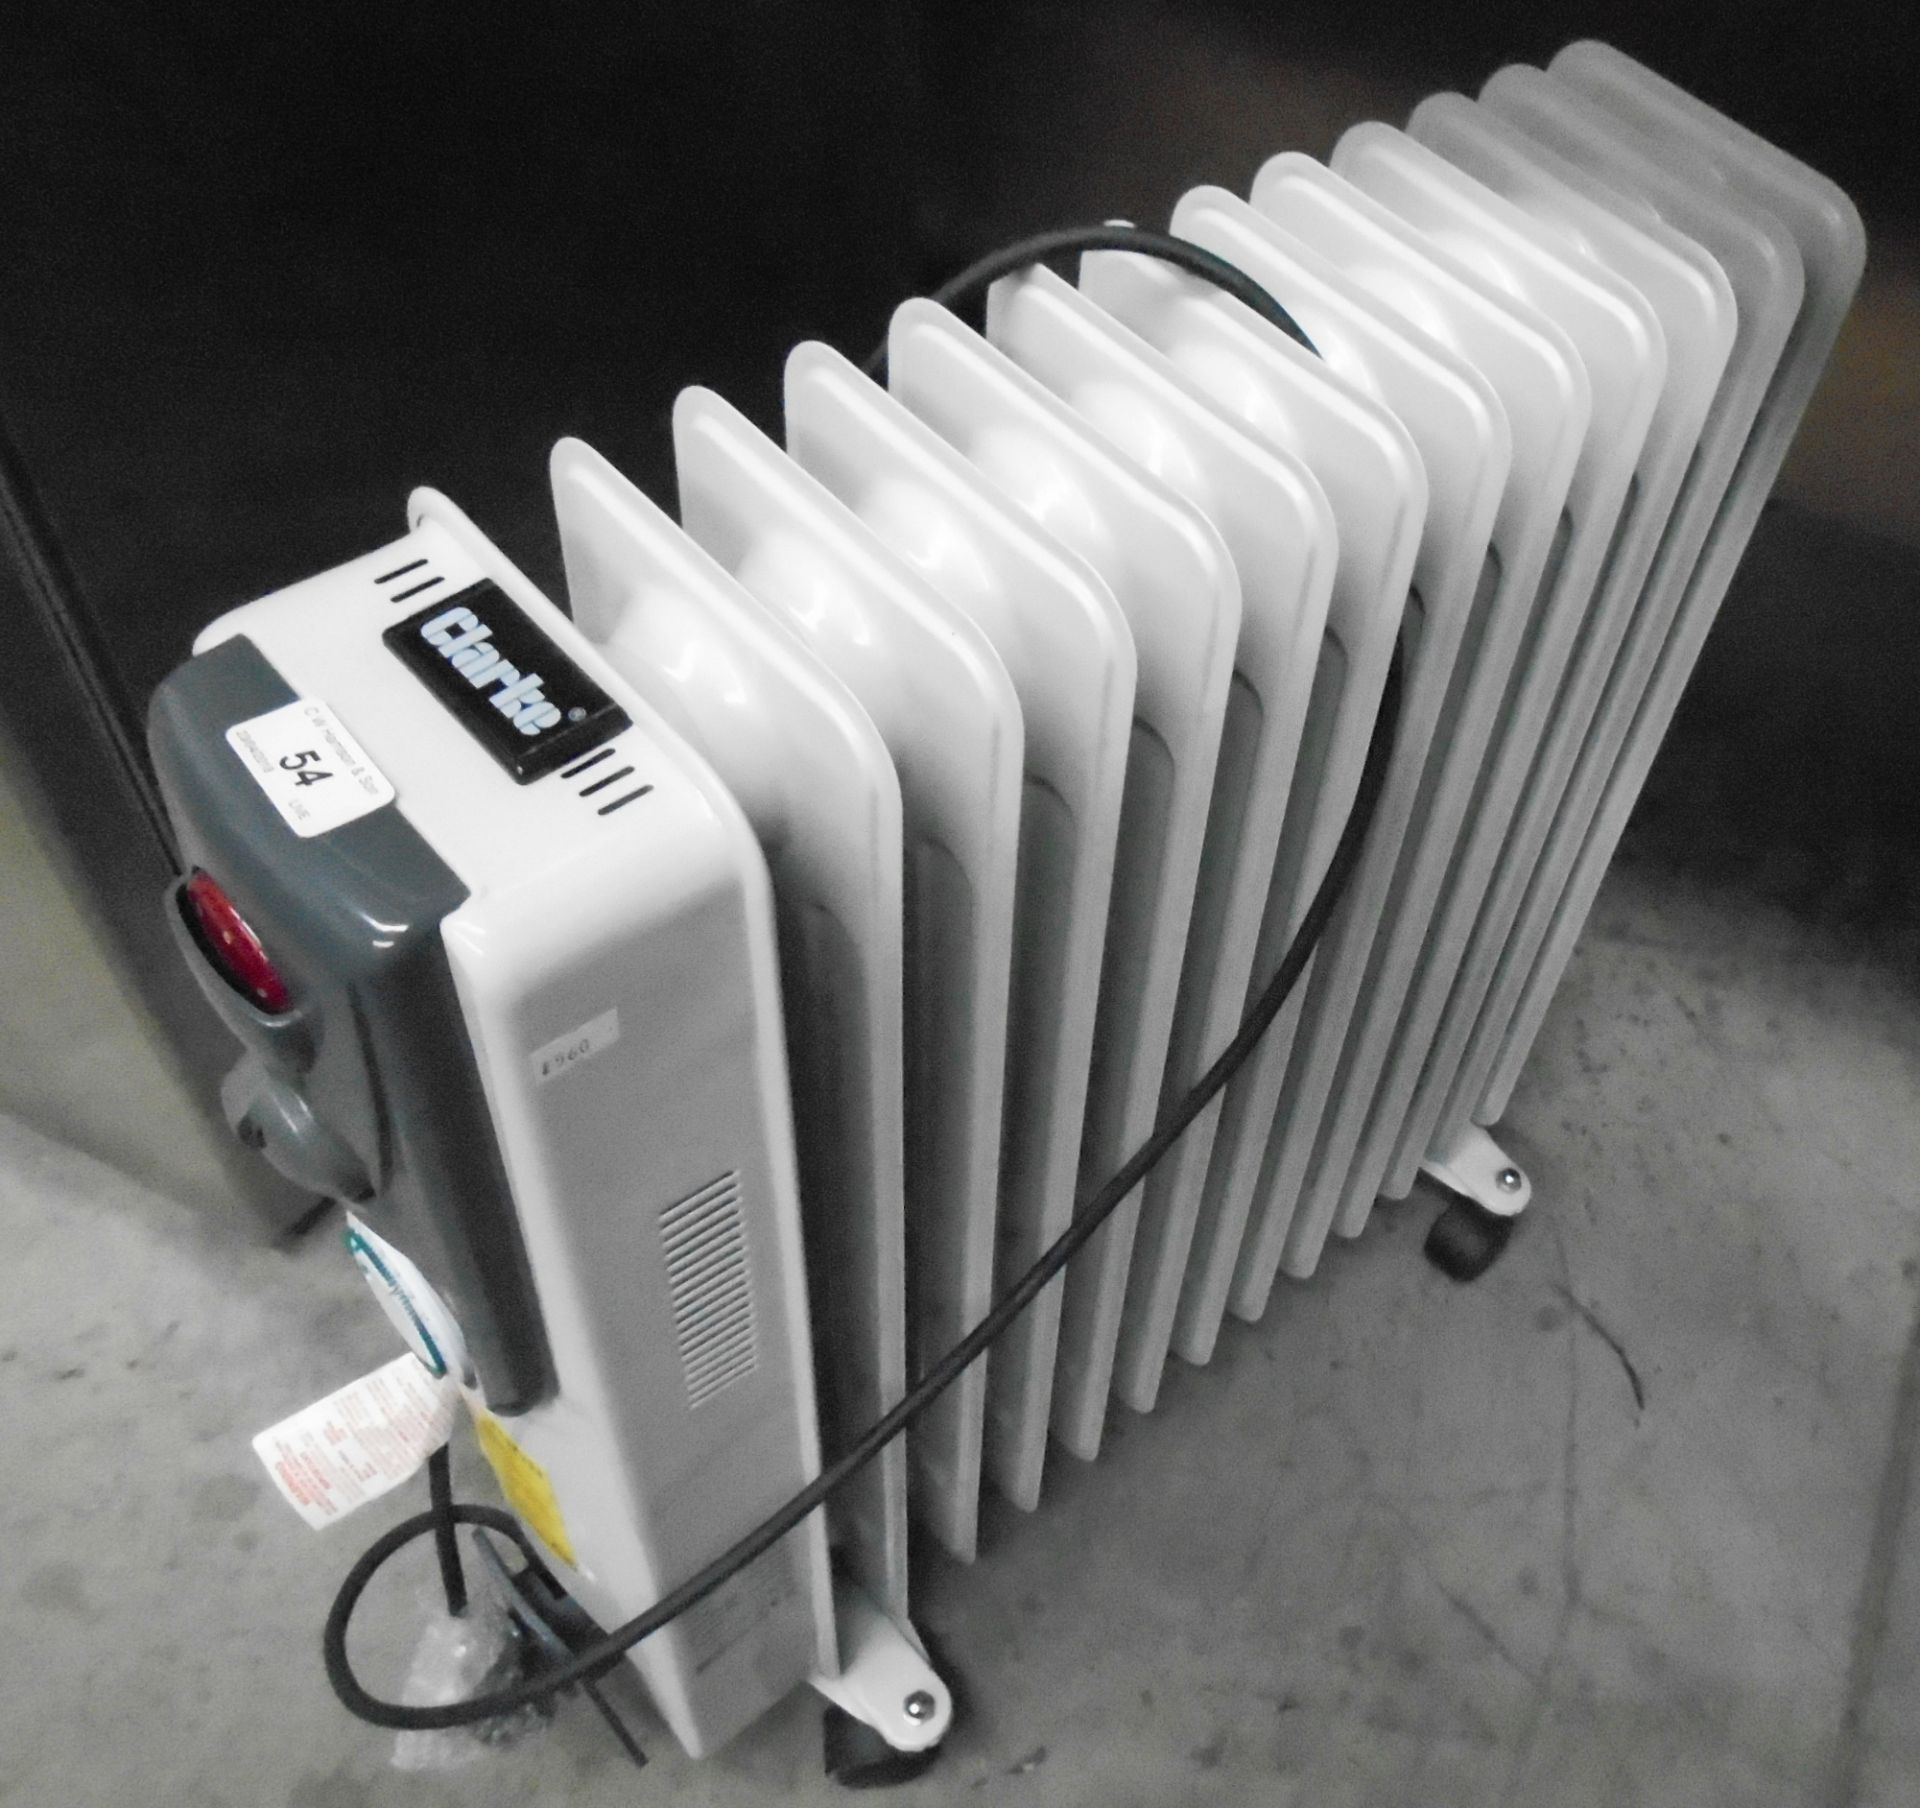 A Clarke OFR 13/250 oil filled radiator